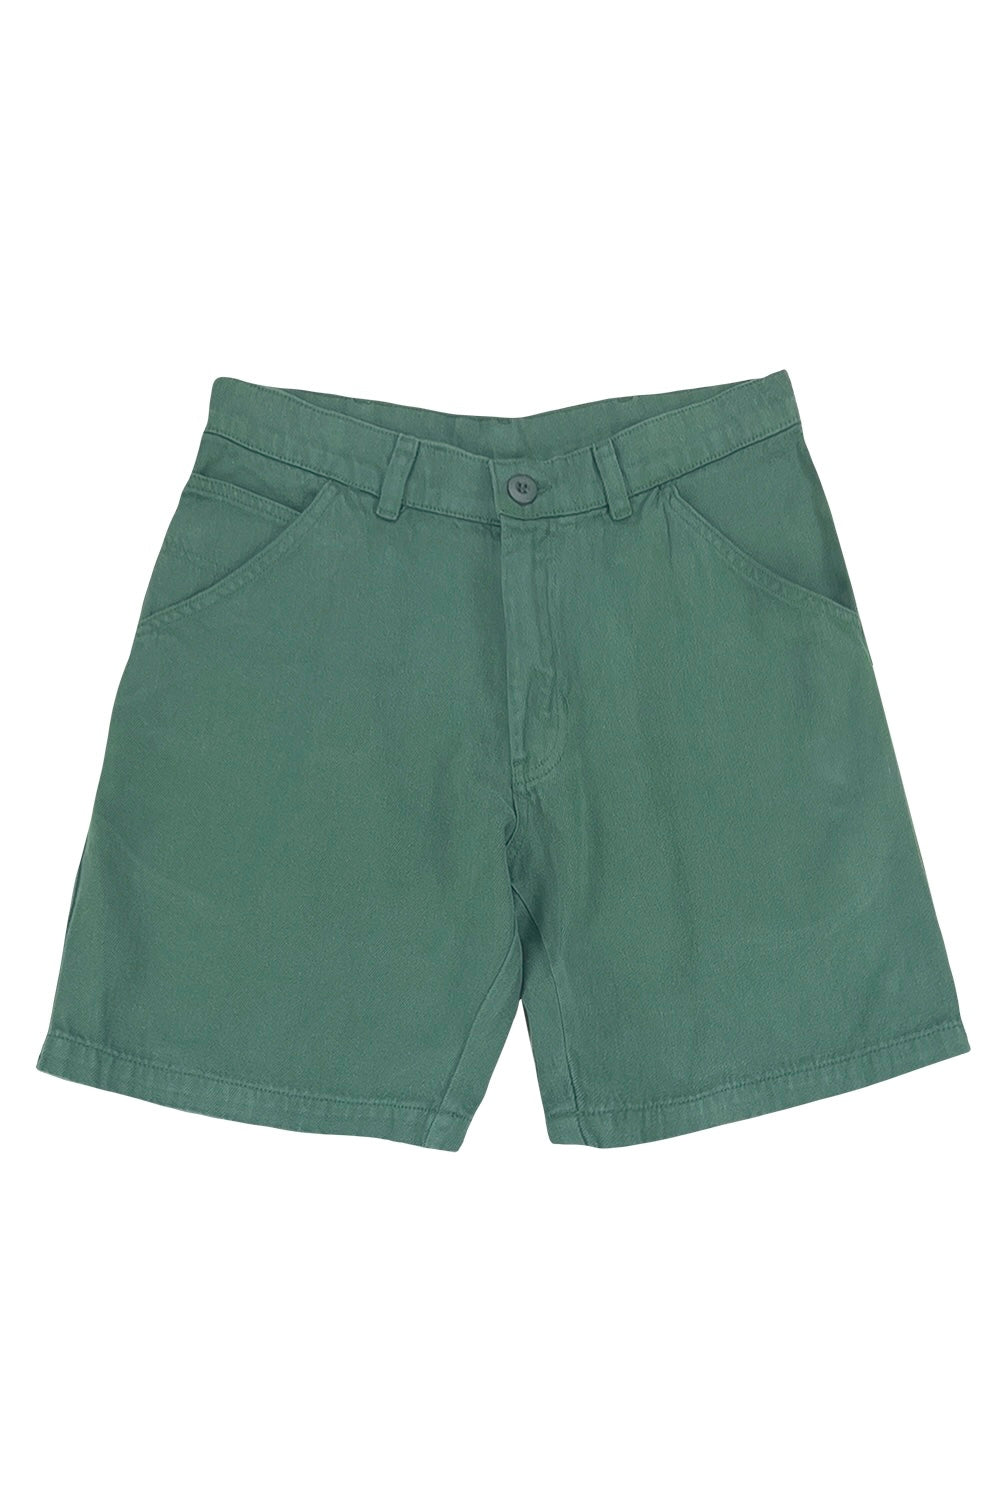 Mountain Short | Jungmaven Hemp Clothing & Accessories / Color: Hunter Green